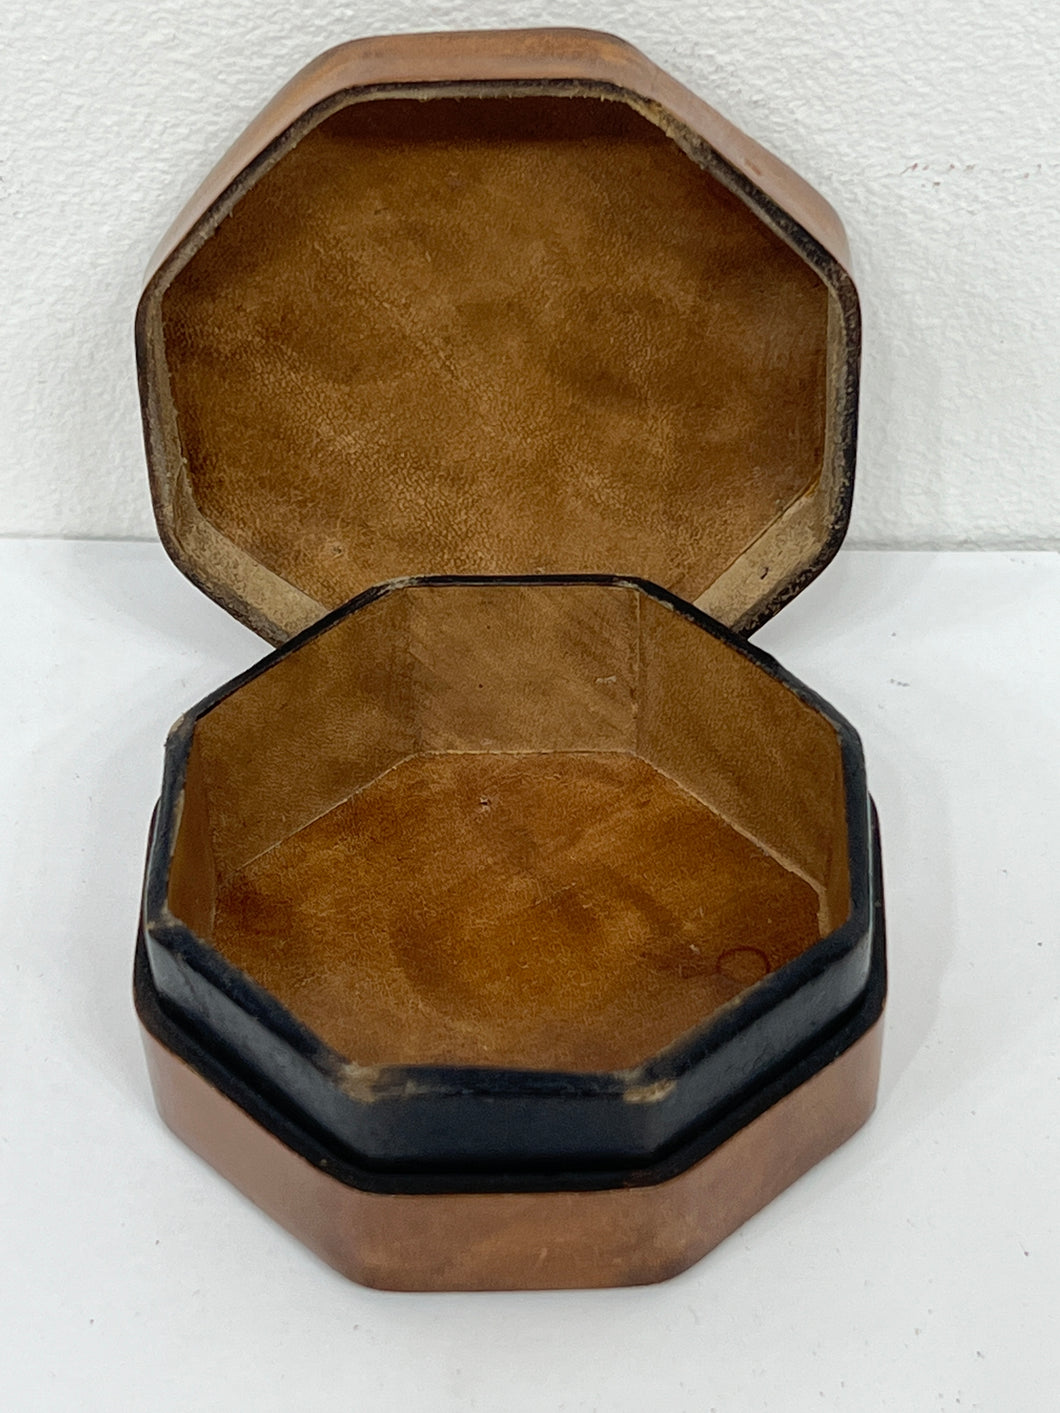 Beautiful vintage leather cufflink trinket jewellery stud box made in Italy